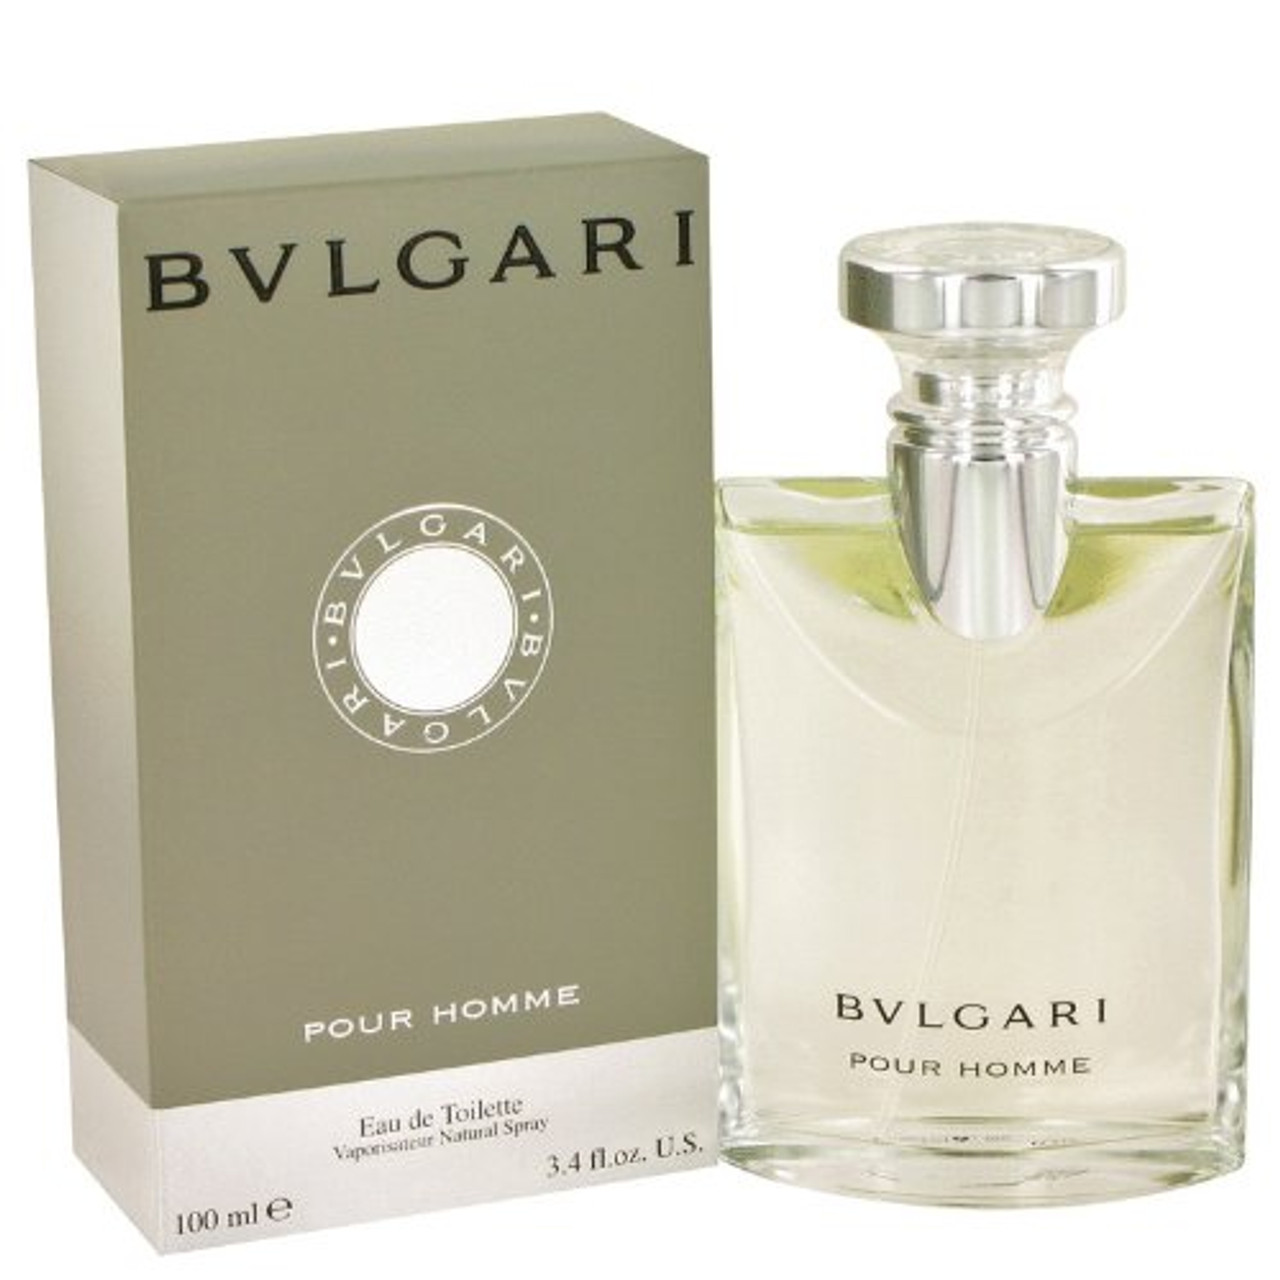 Bvlgari Pour Homme Bvlgari cologne - a fragrance for men 1996